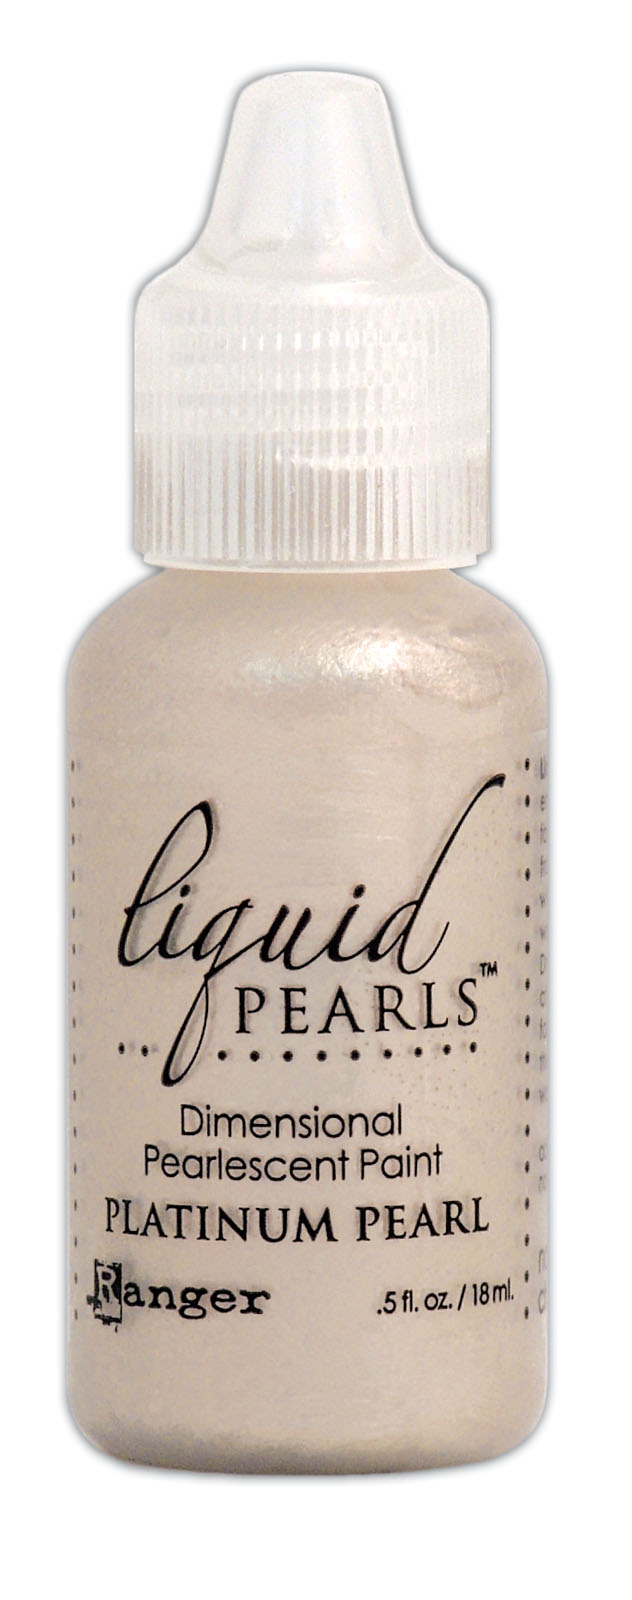 Ranger • Liquid pearls 14 grs. Platinum Pearl